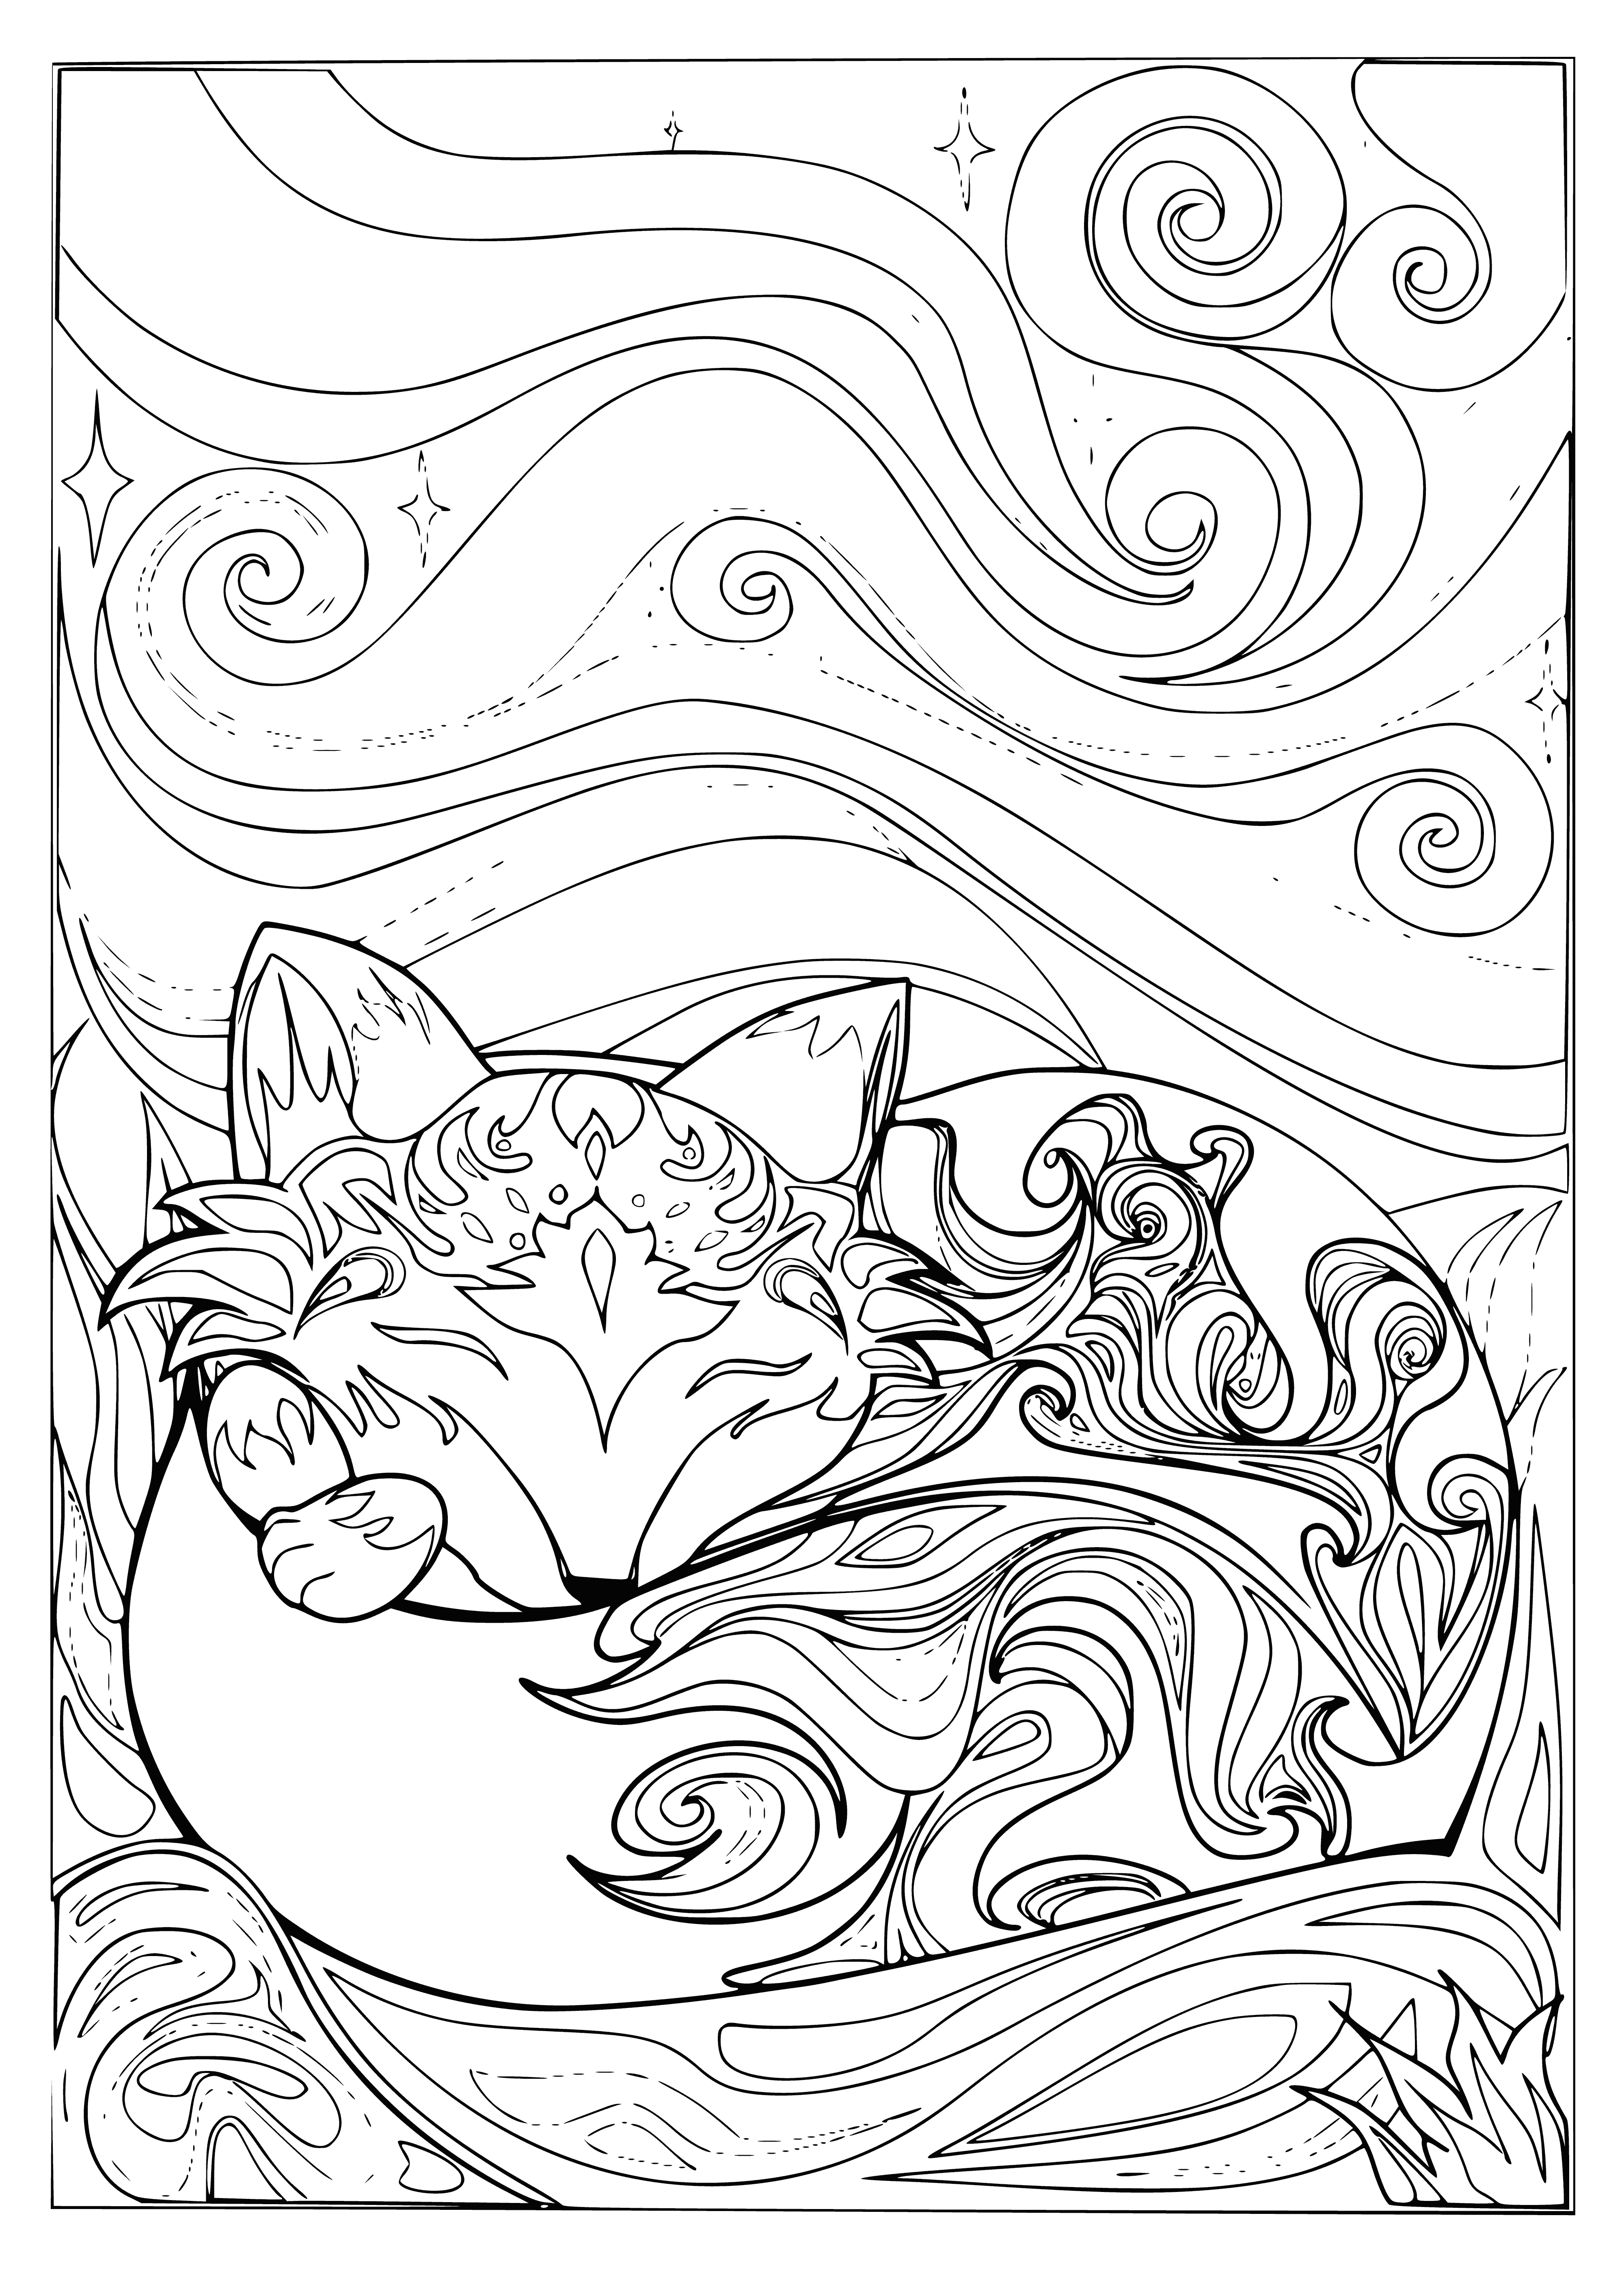 Sleeping fox coloring page